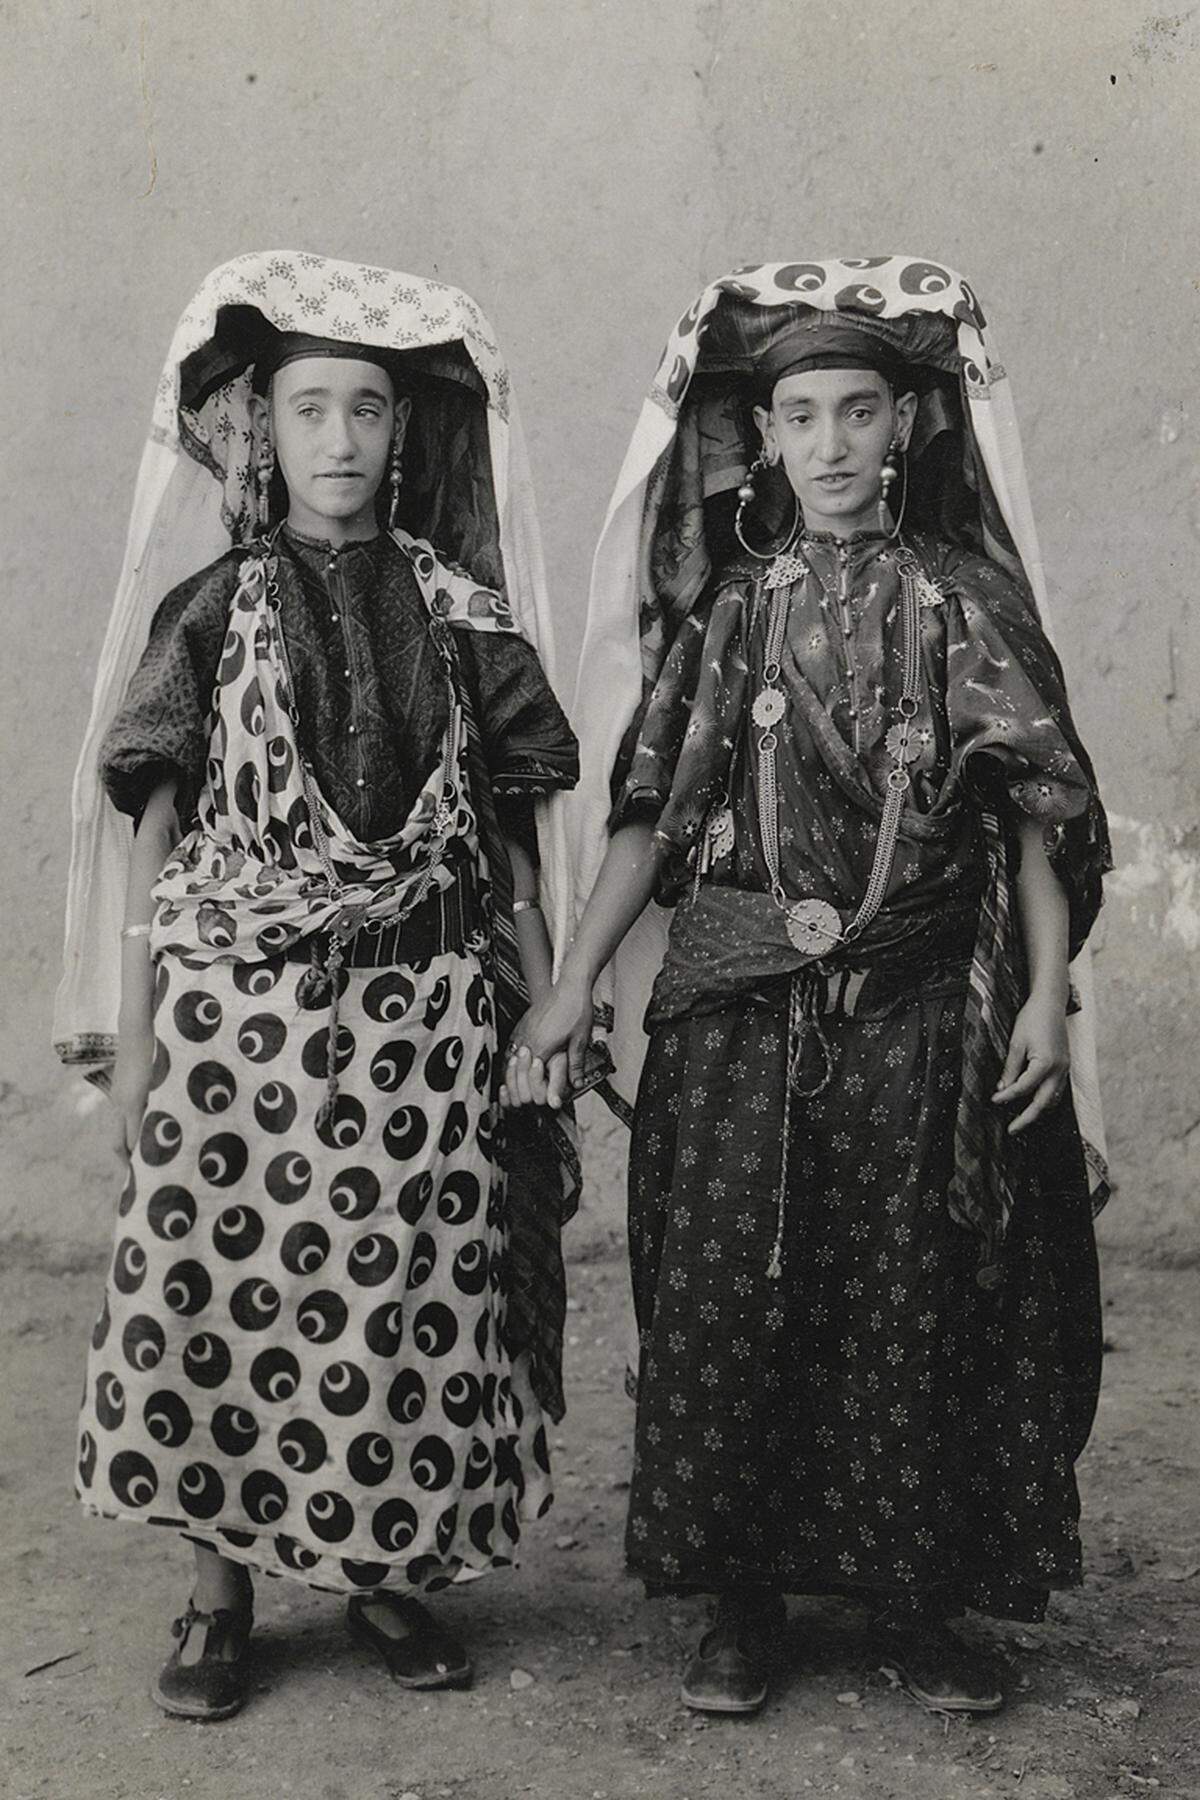 Citroën-Haardt Expedition Zentral-Afrika: Zwei Frauen in Colomb-Béchar, Algerien, 1924 (c) National Geographic Image Collection